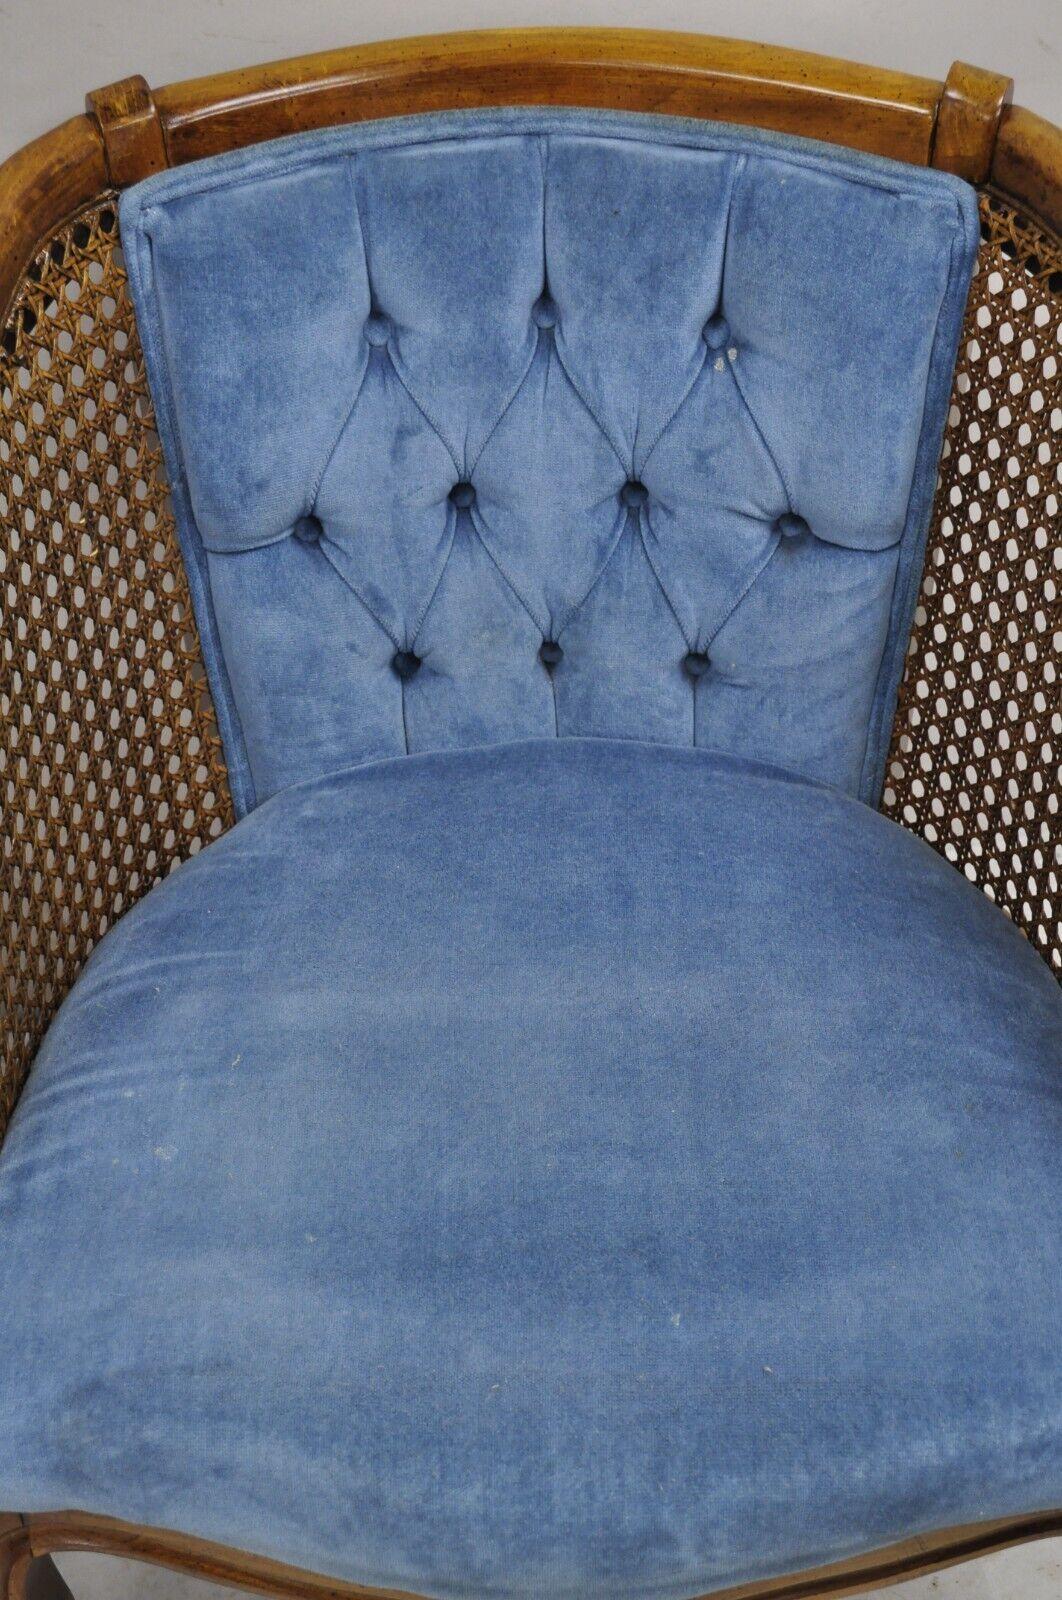 Vintage Hollywood Regency Cane Barrel Back Blue Club Lounge Chairs - a Pair 3